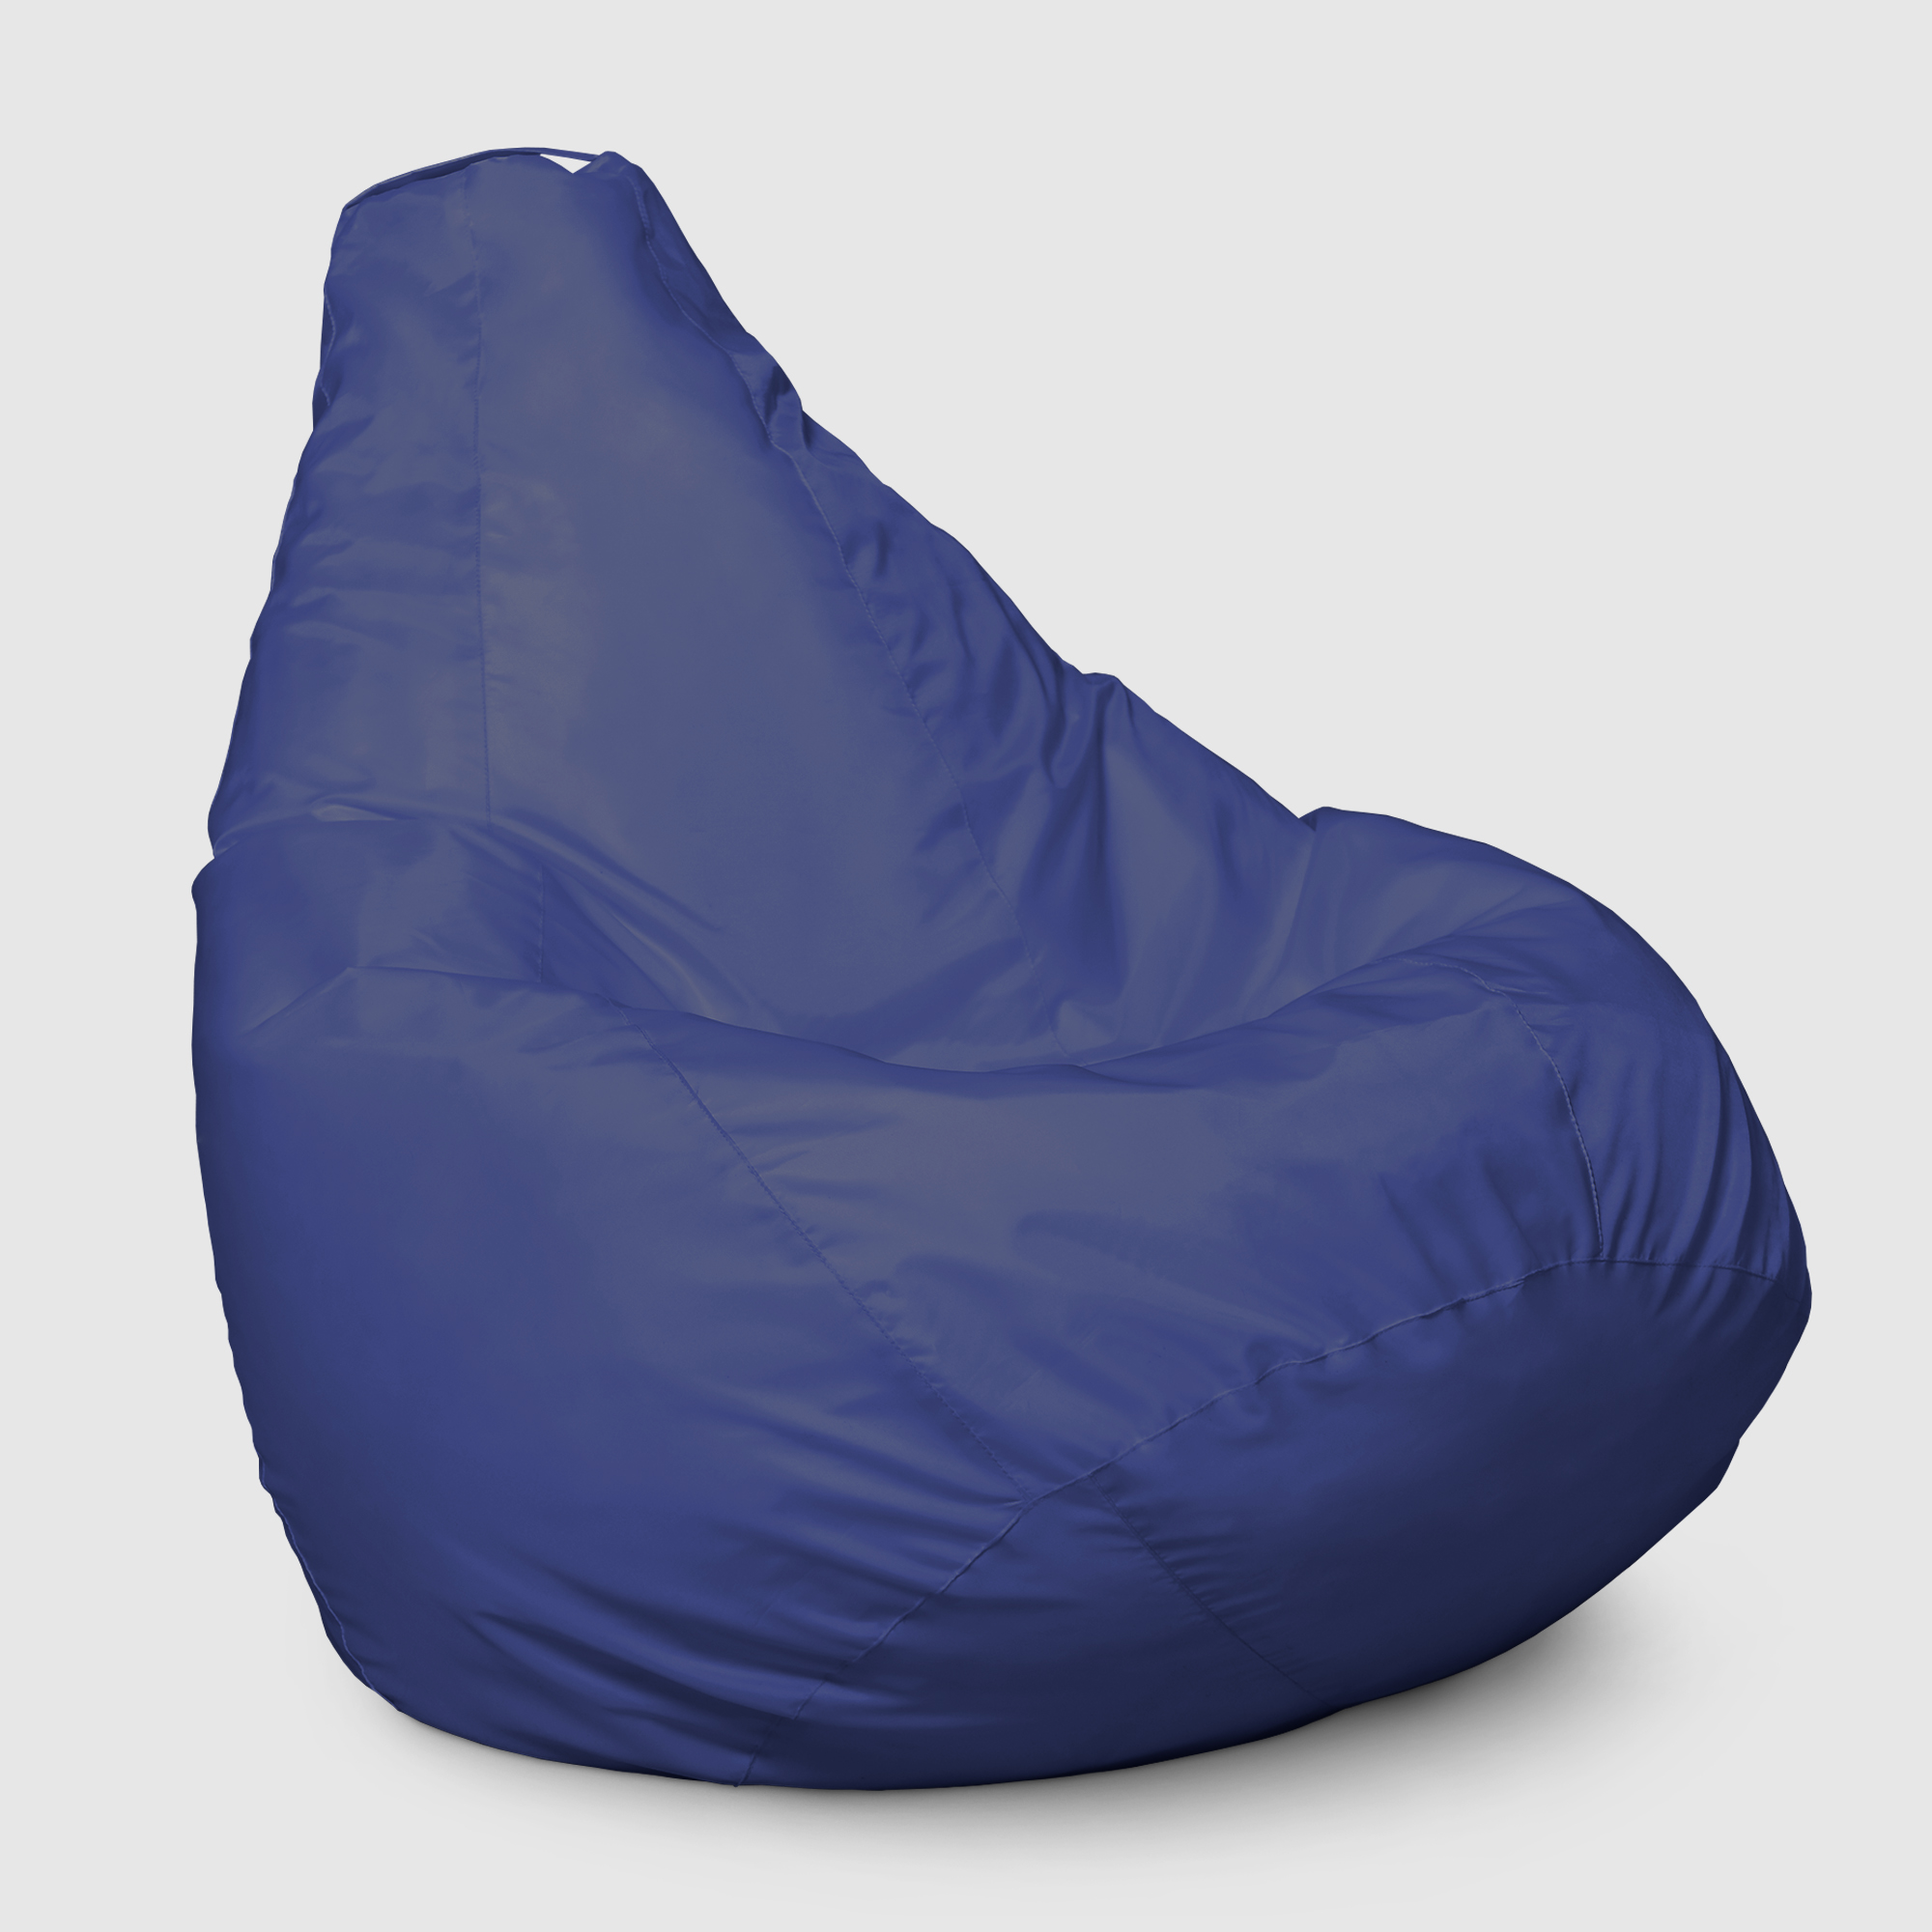 Кресло мешок Dreambag Меган xl темно-синее 85х85х125 см кресло мешок dreambag меган xl голубое 85х85х125см